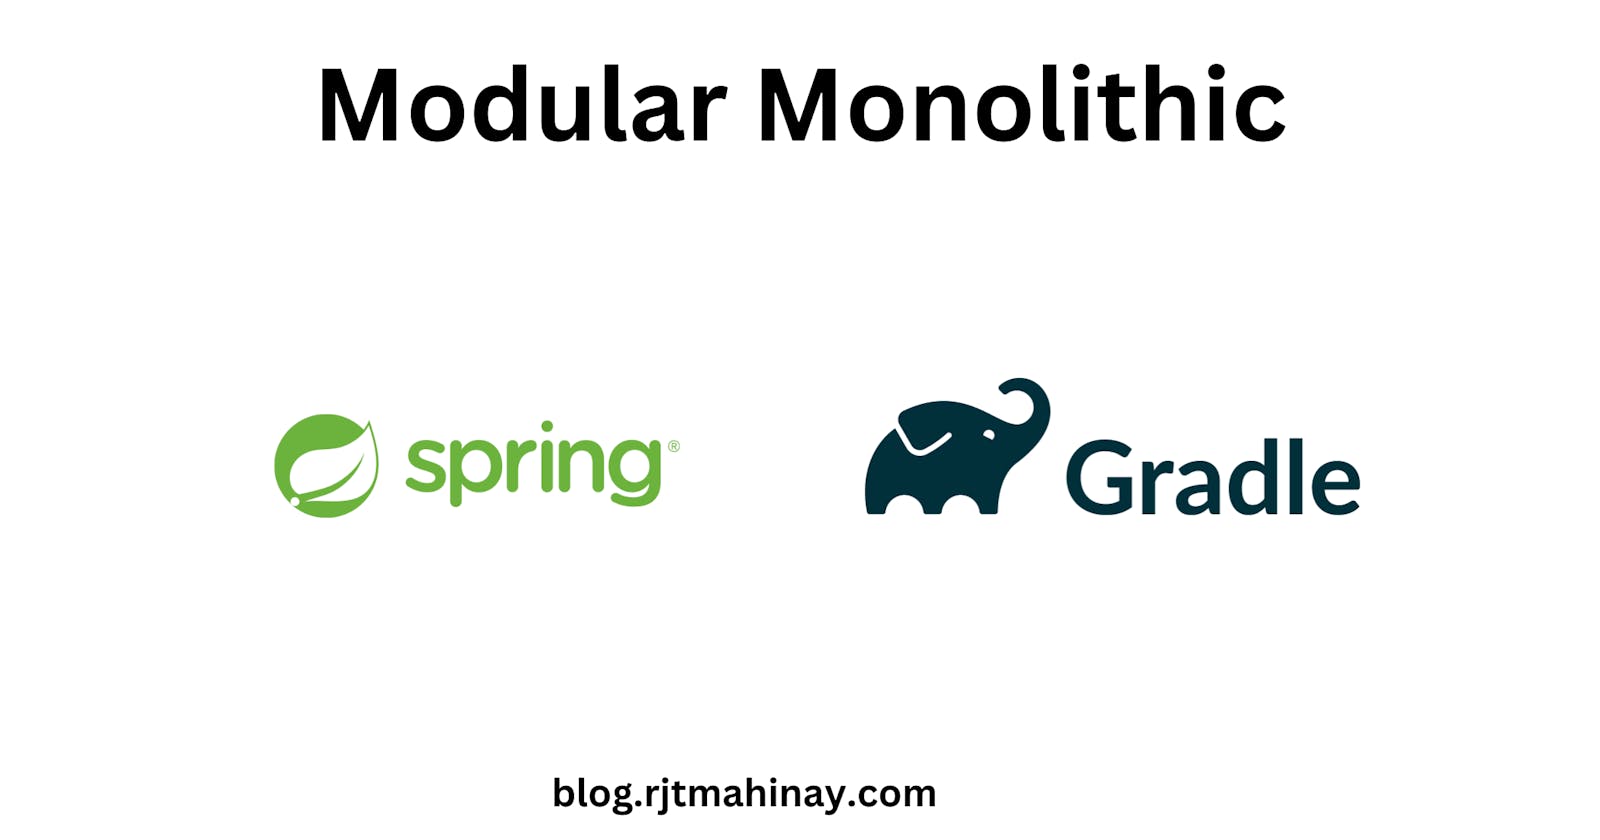 Modular Monolithic in Practice